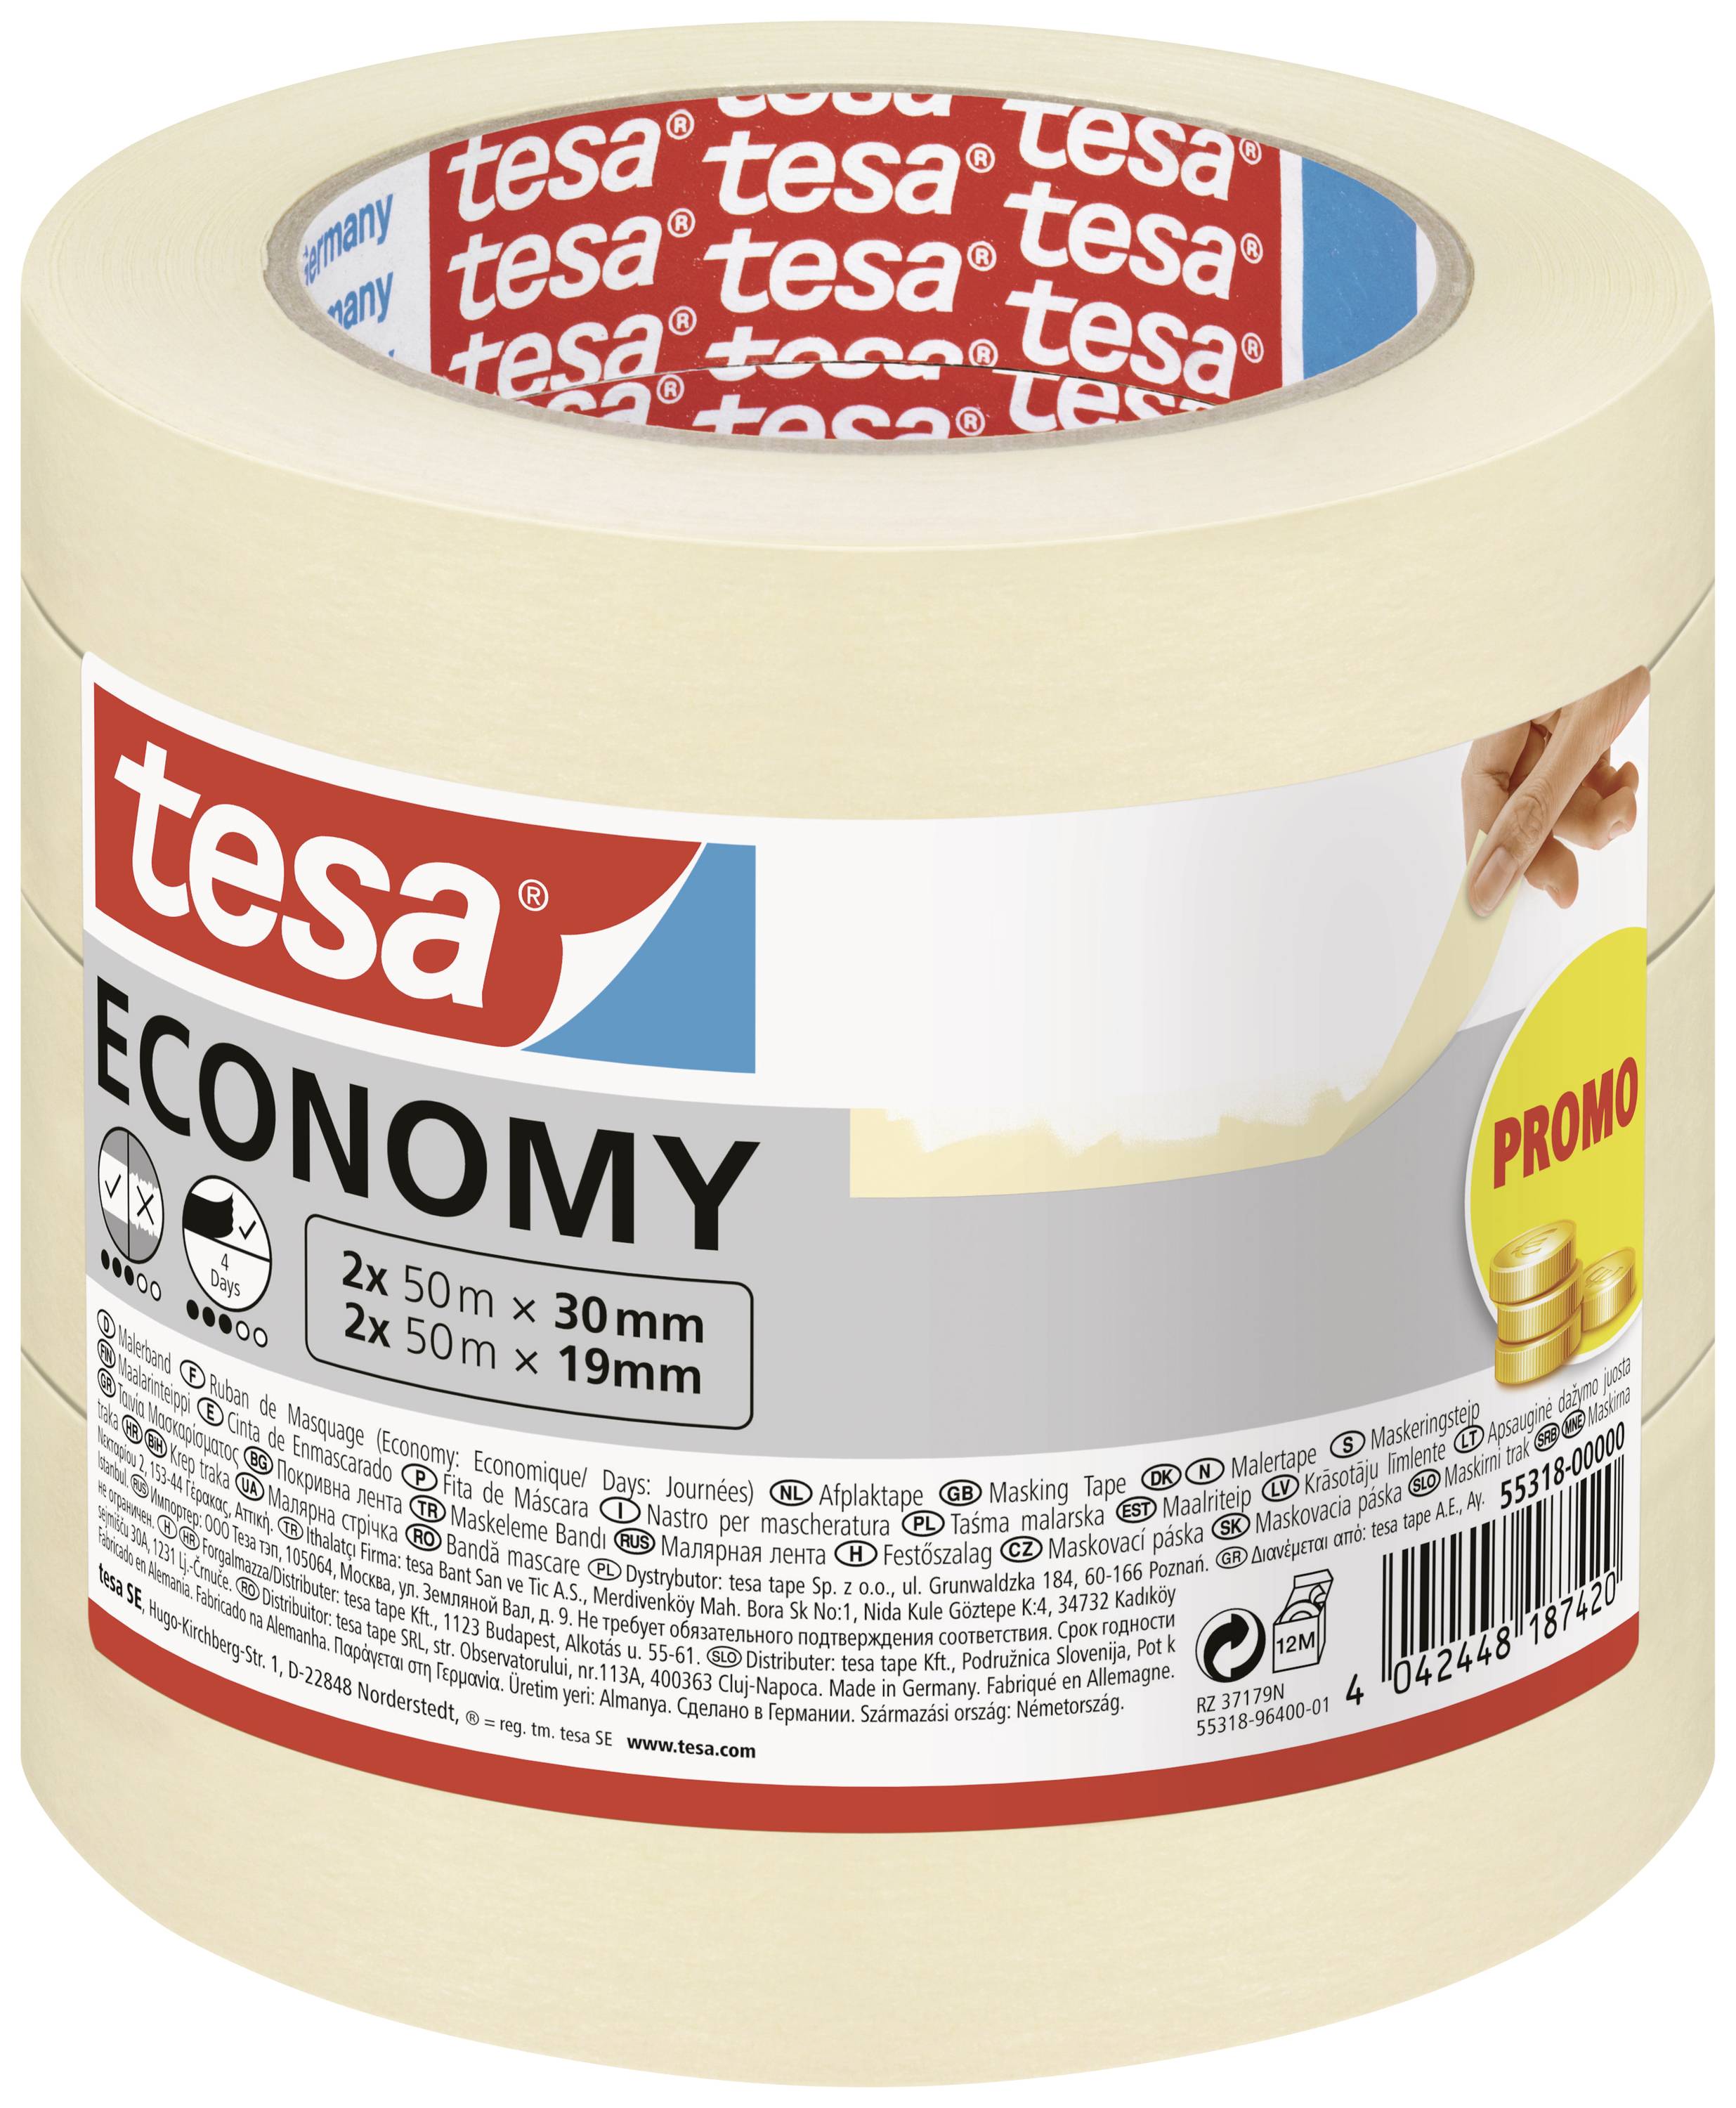 TESA Economy 55318-00000-04 Malerabdeckband Weiß 1 Set